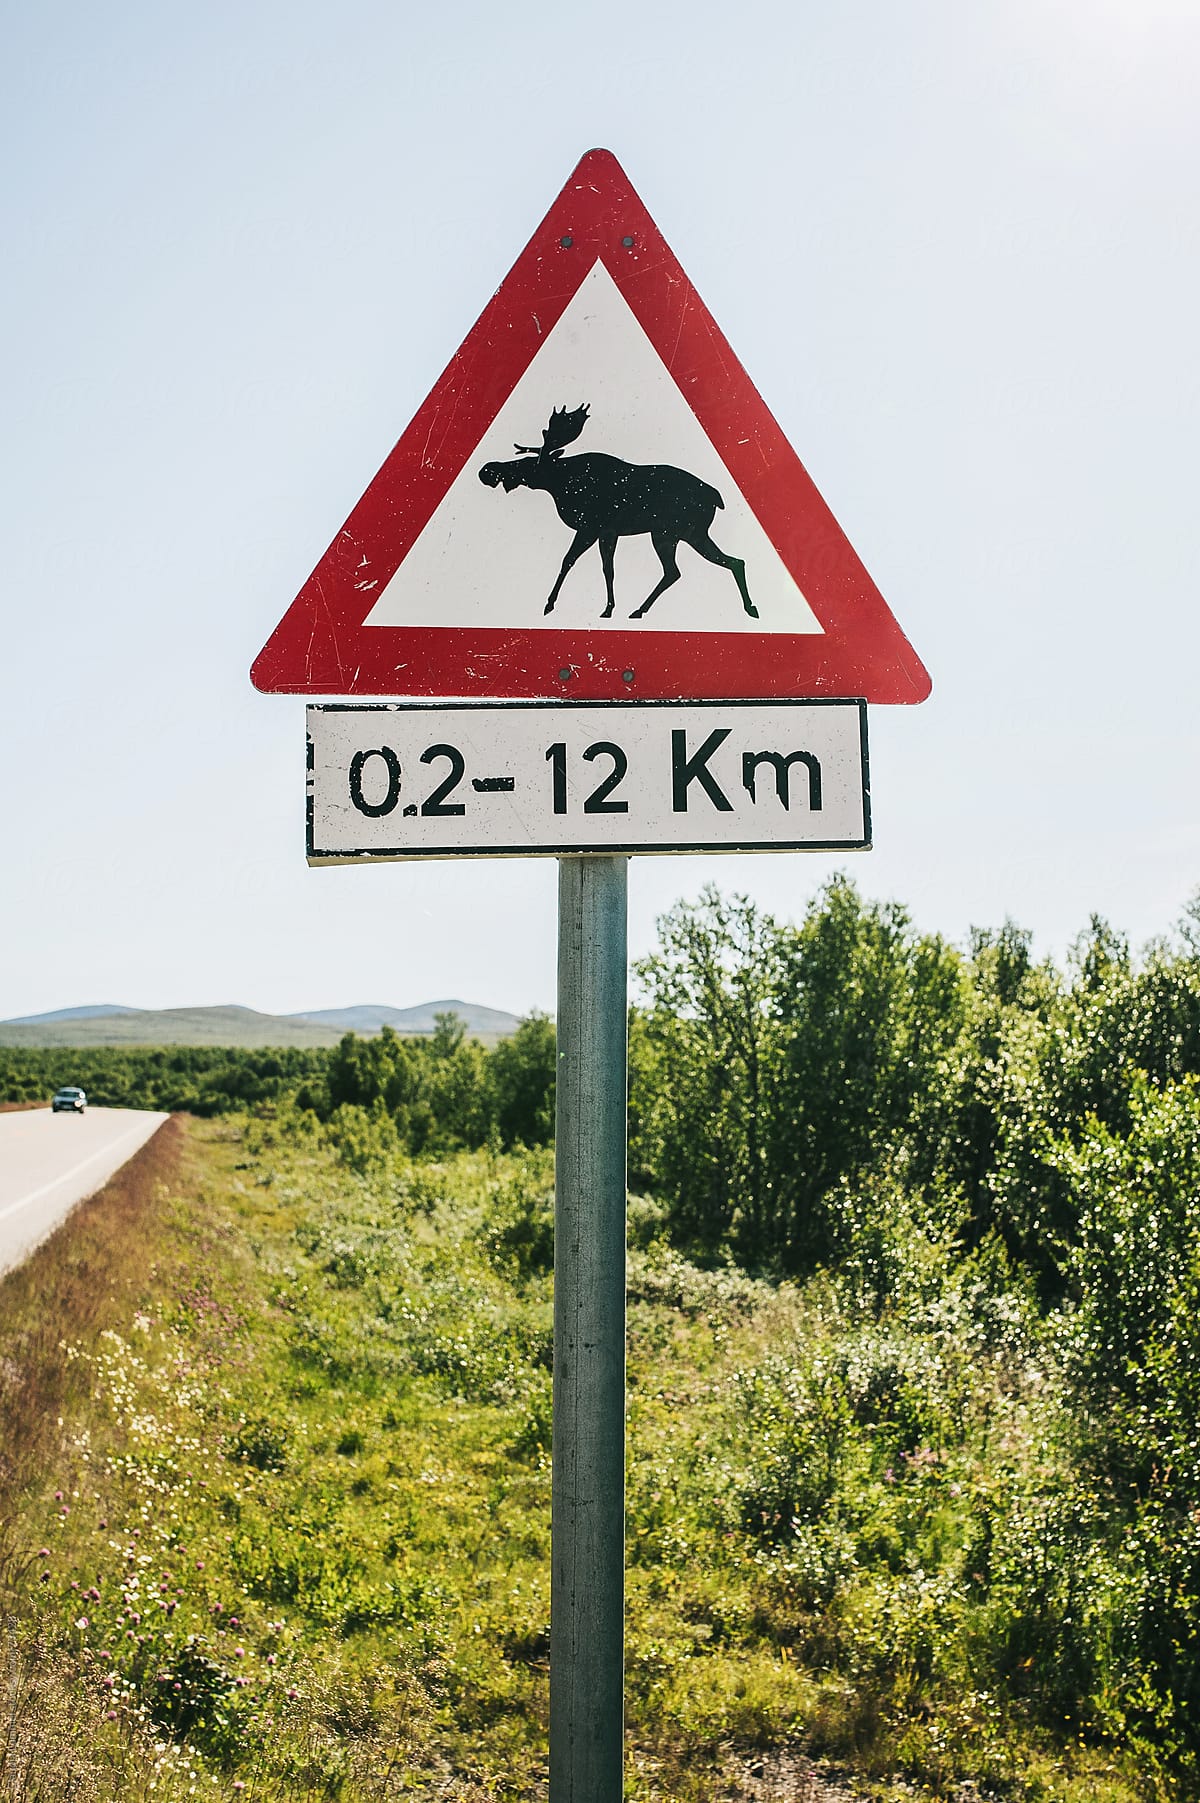 Moose warning sign in Norway, Scandinavia